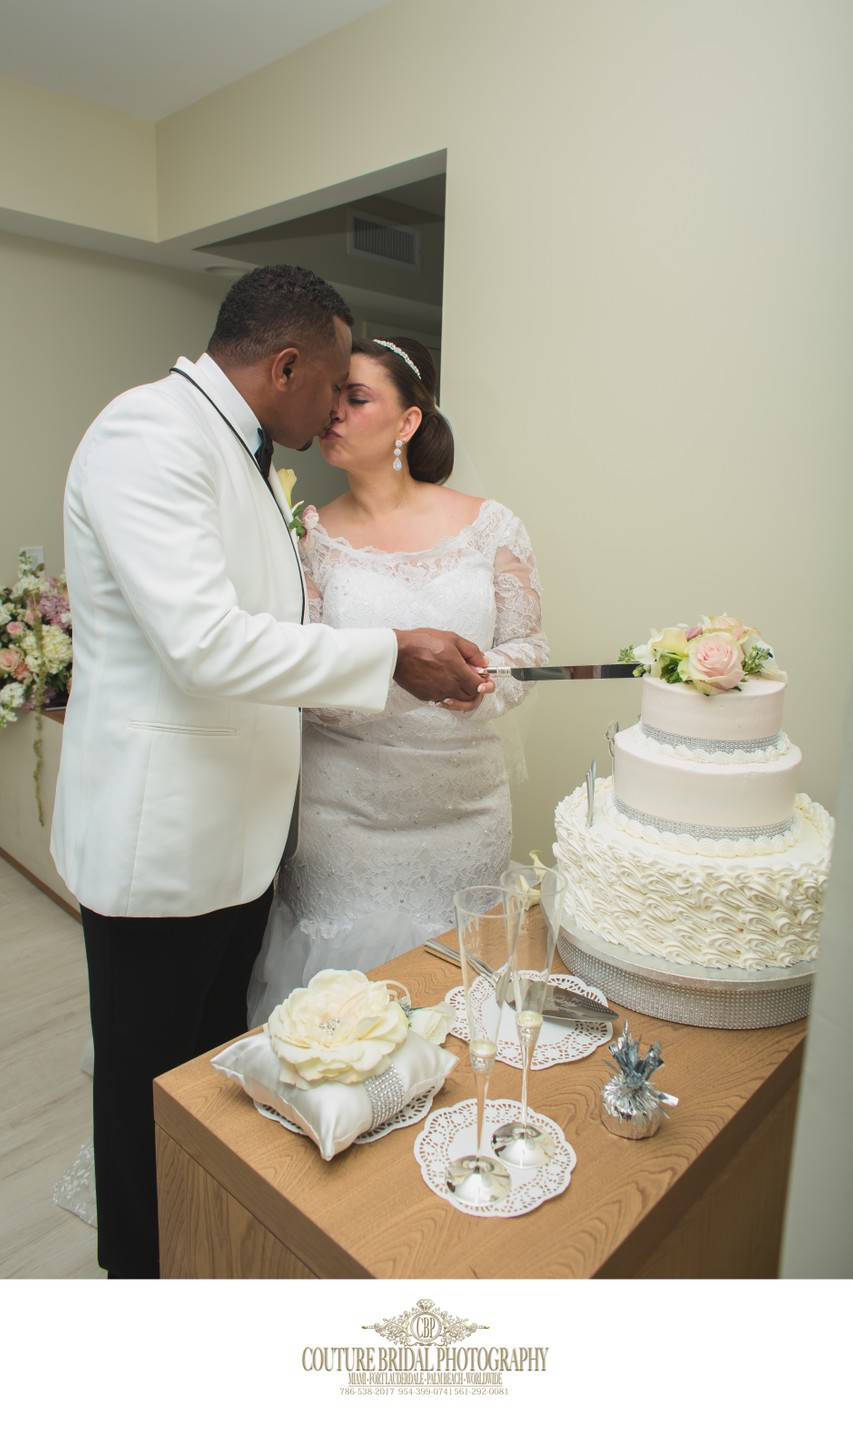 WEDDING CAKE CUTTING PHOTOS